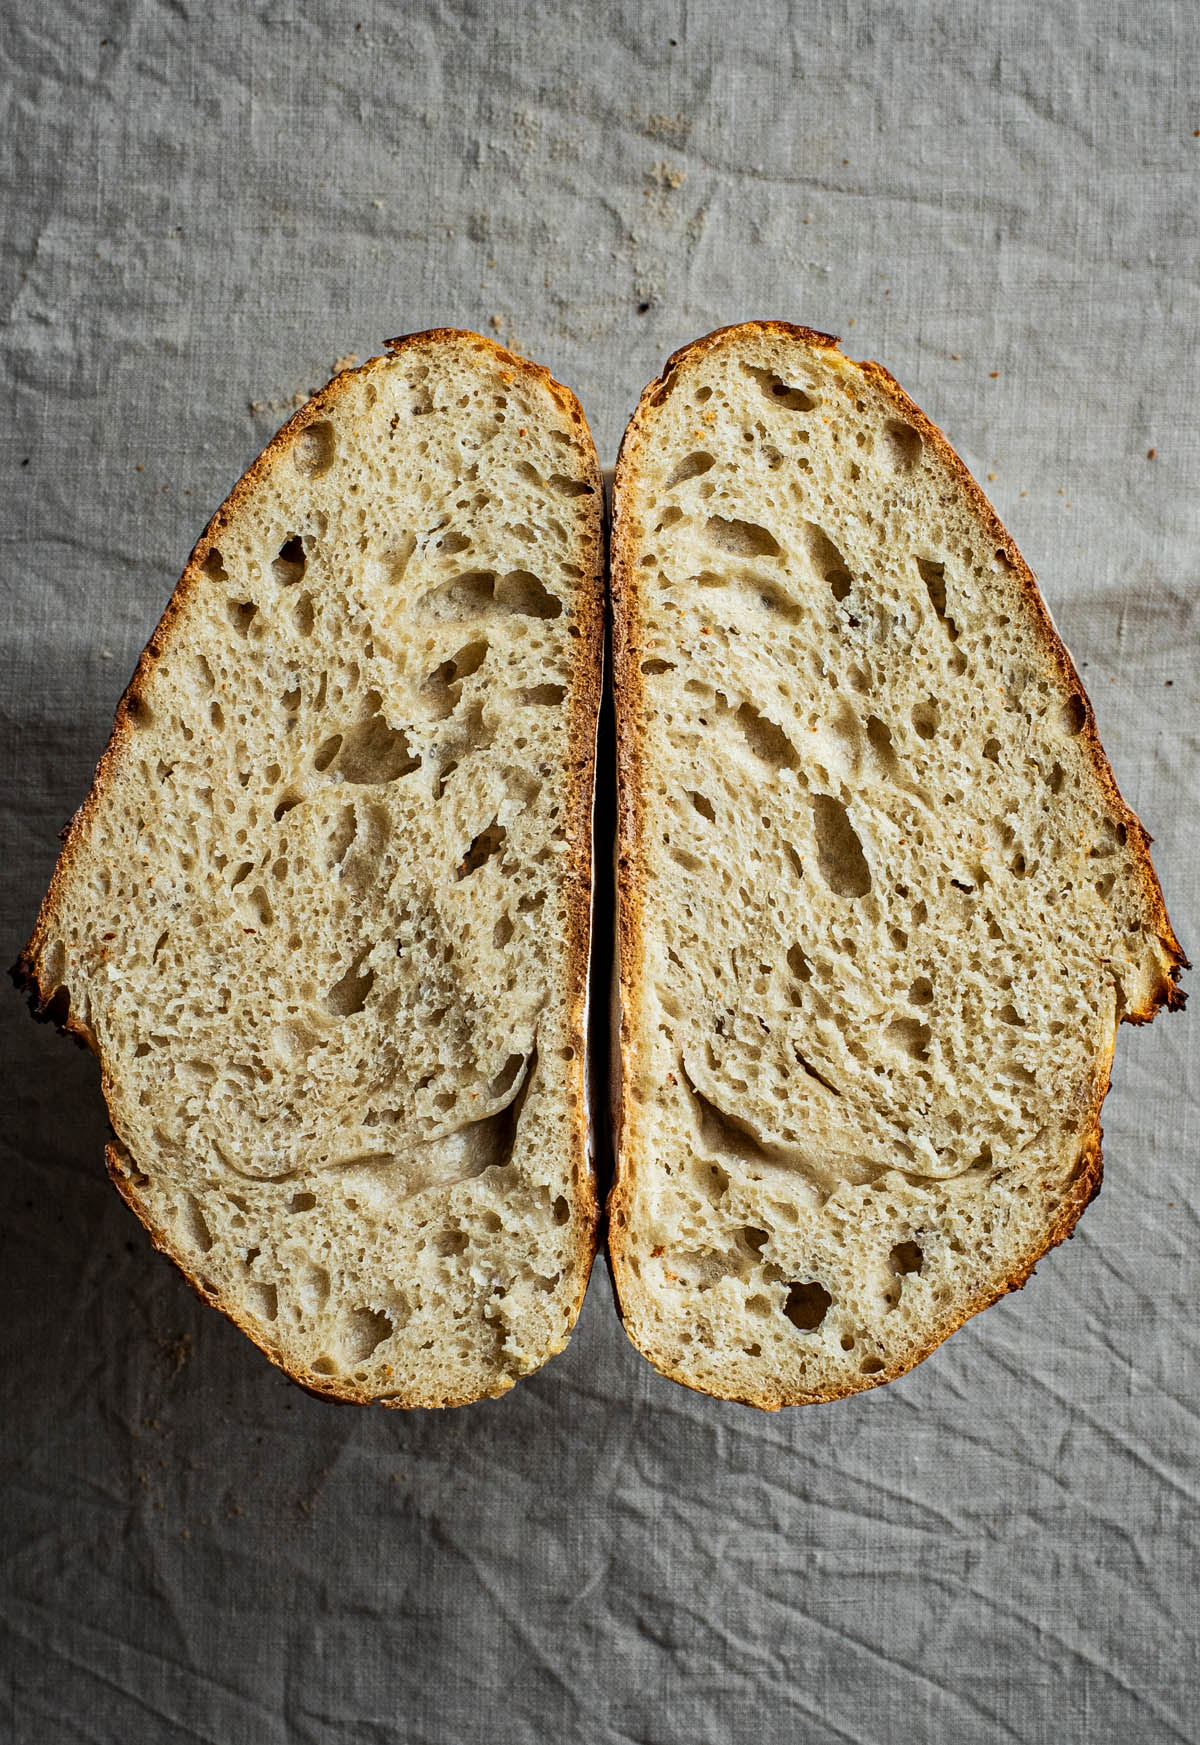 Halved bread loaf, interior facing up.